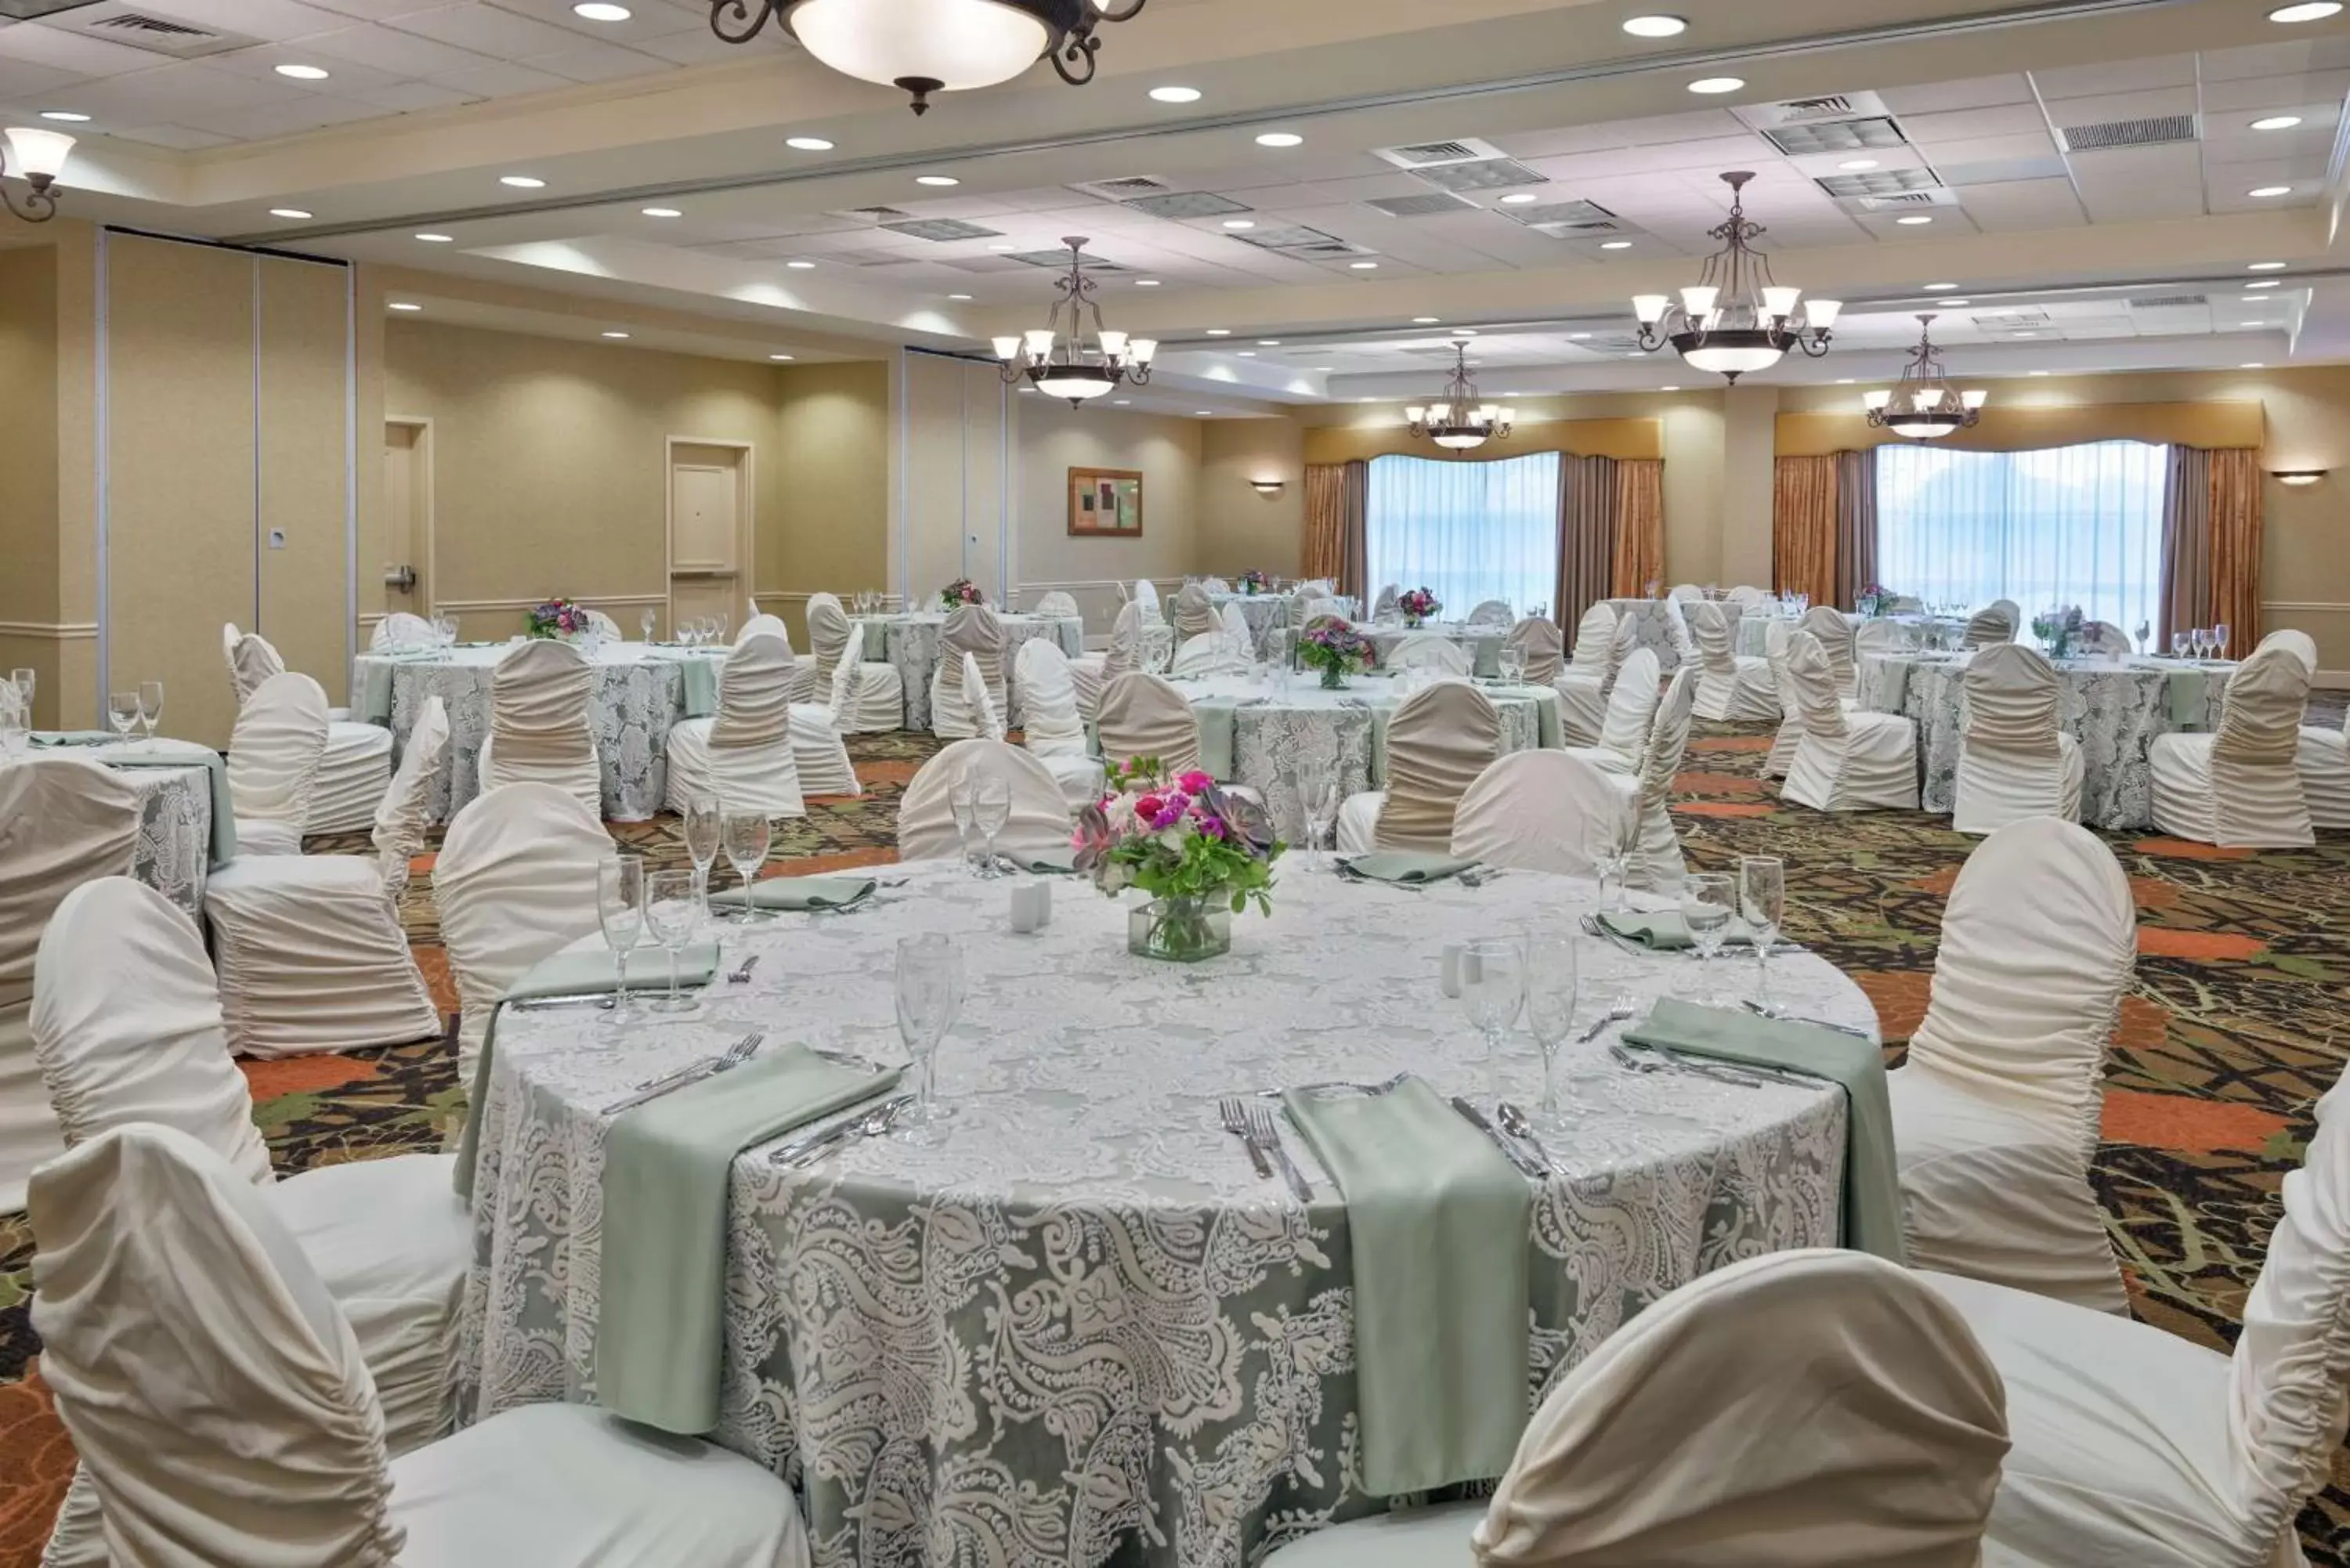 Meeting/conference room, Banquet Facilities in Hilton Garden Inn Buffalo Airport